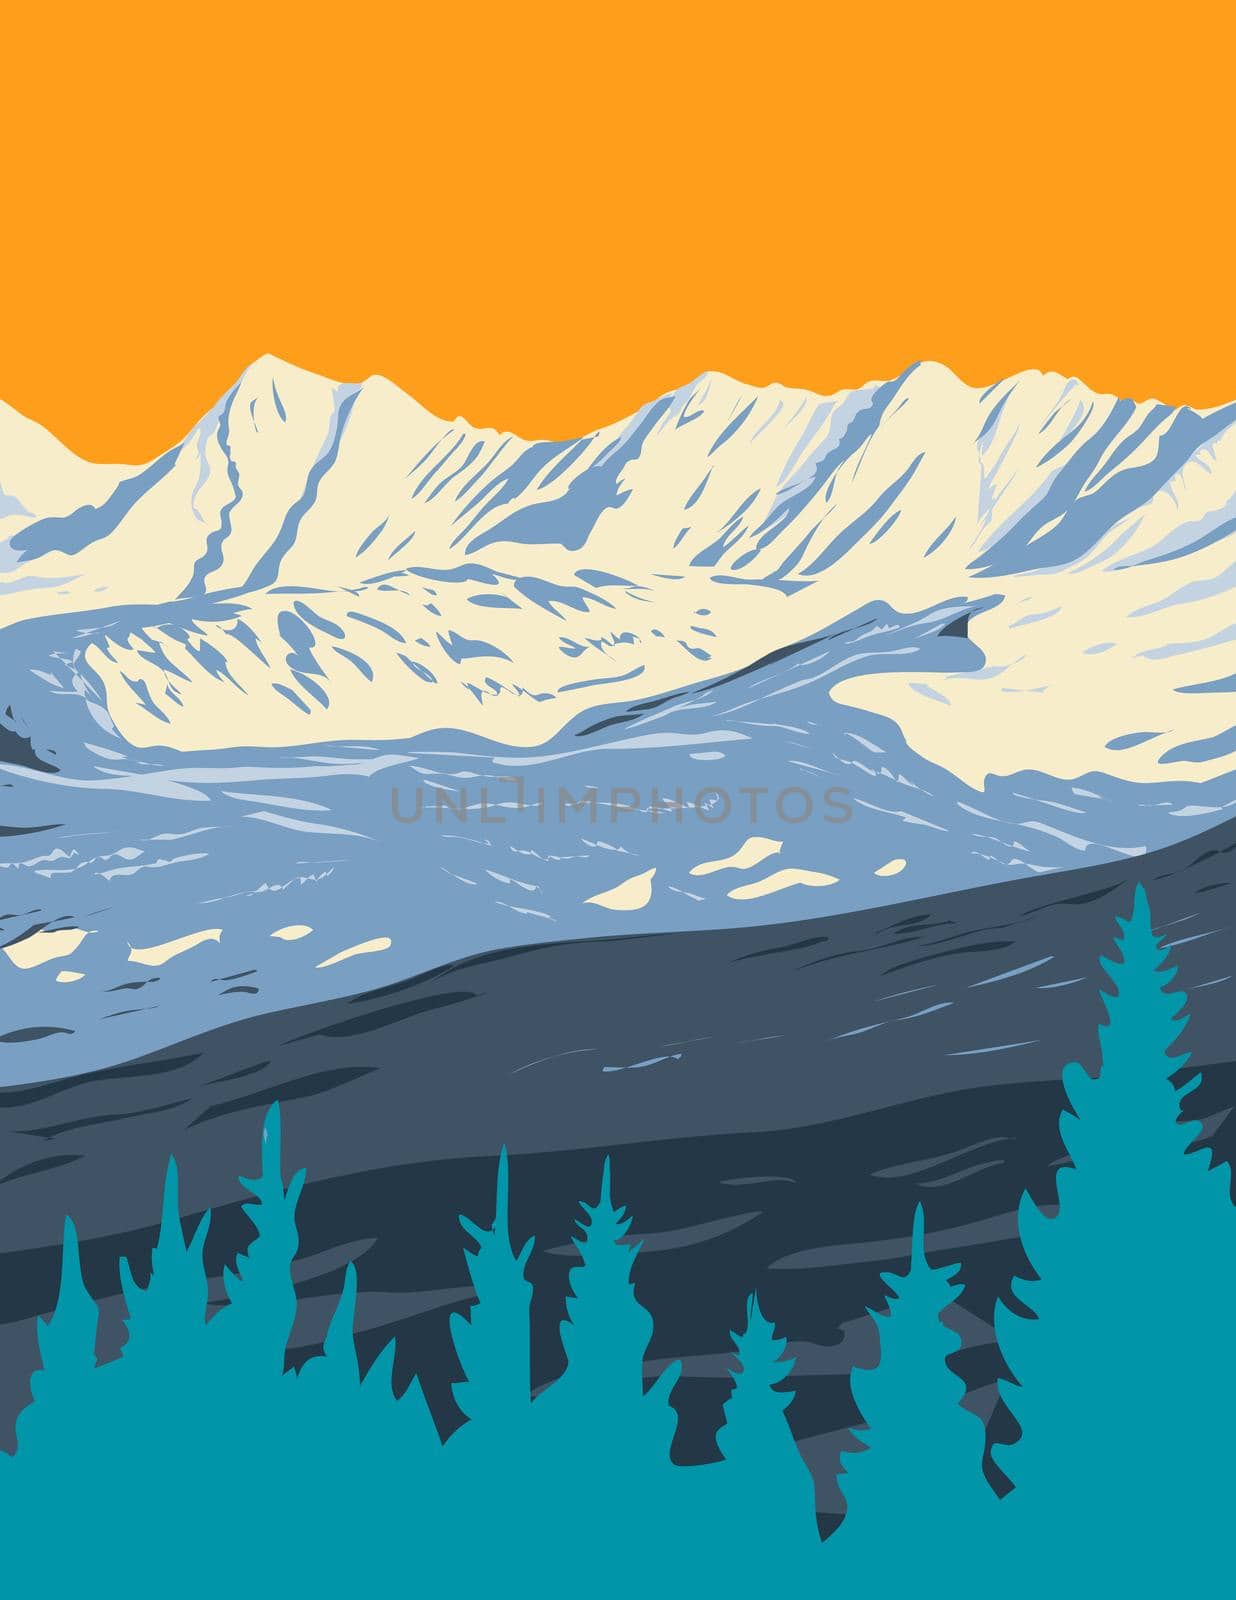 Vail Mountain Ski Area Located in Vail Colorado WPA Poster Art by patrimonio